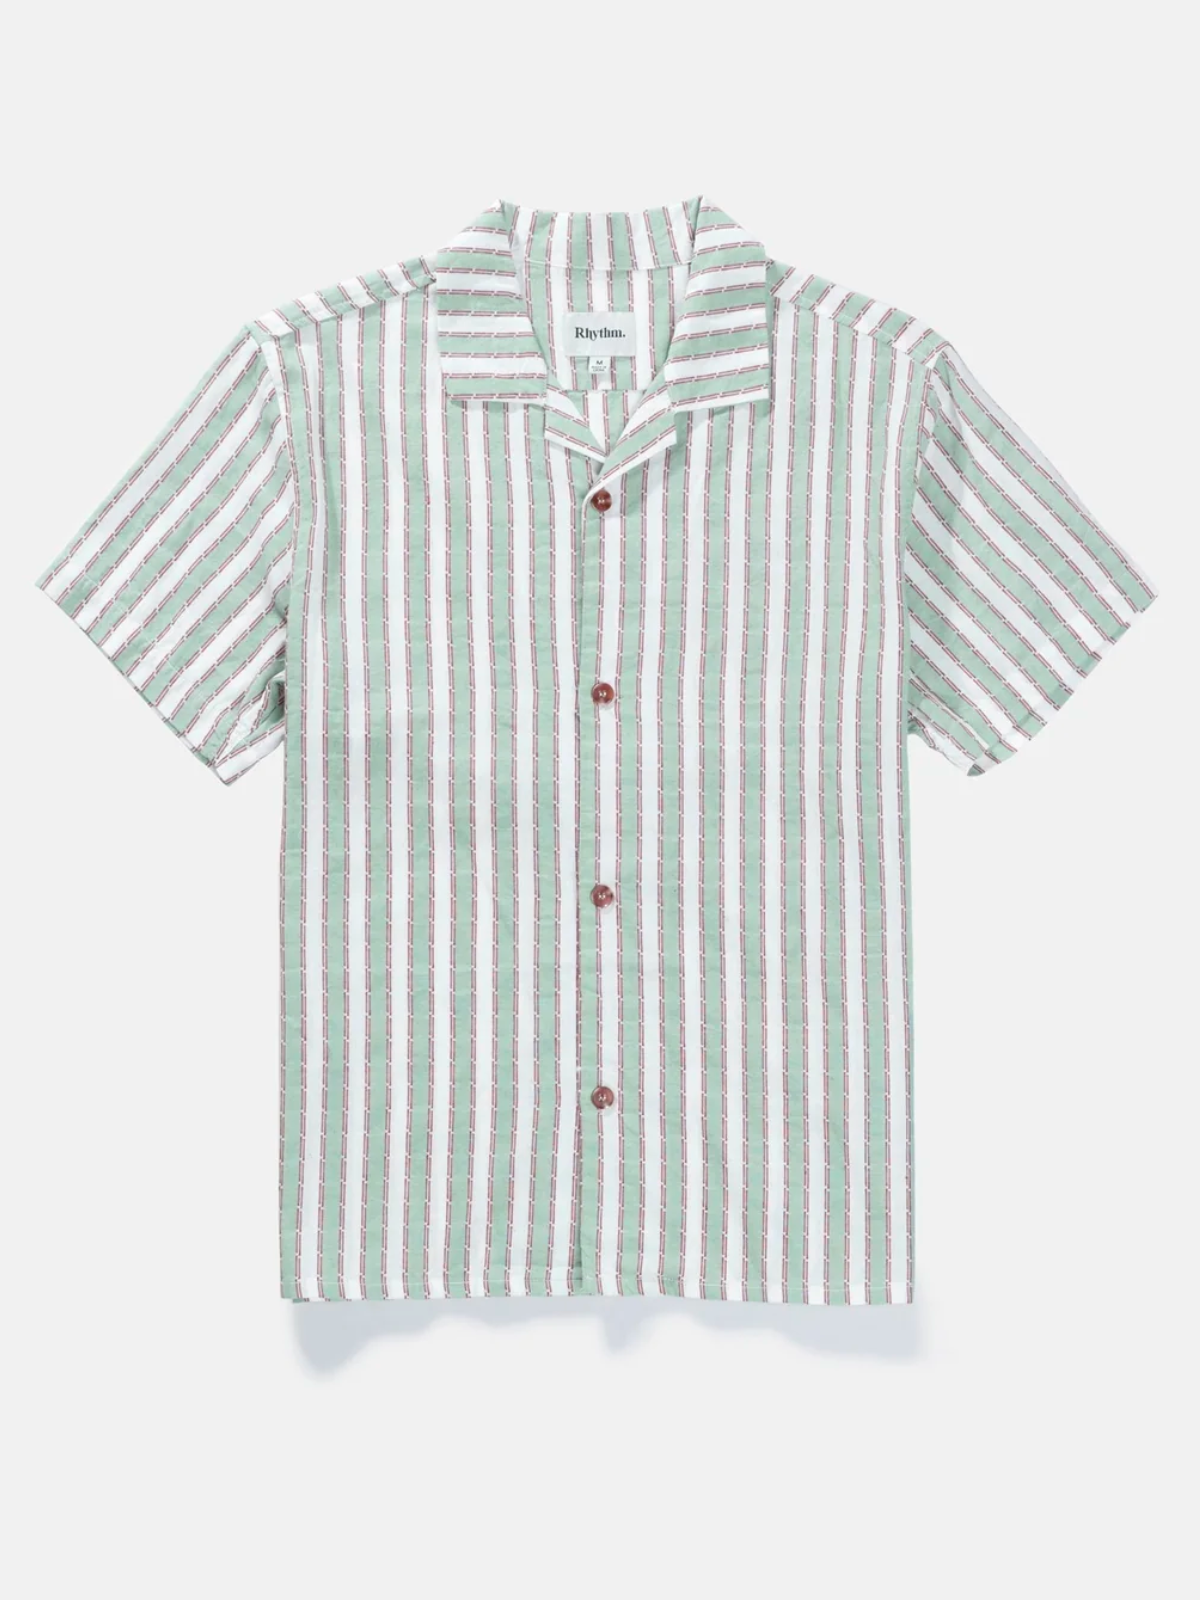 rhythm vacation stripe ss short sleeve shirt sea green white orange brown 100% cotton kempt athens ga georgia men's clothing store